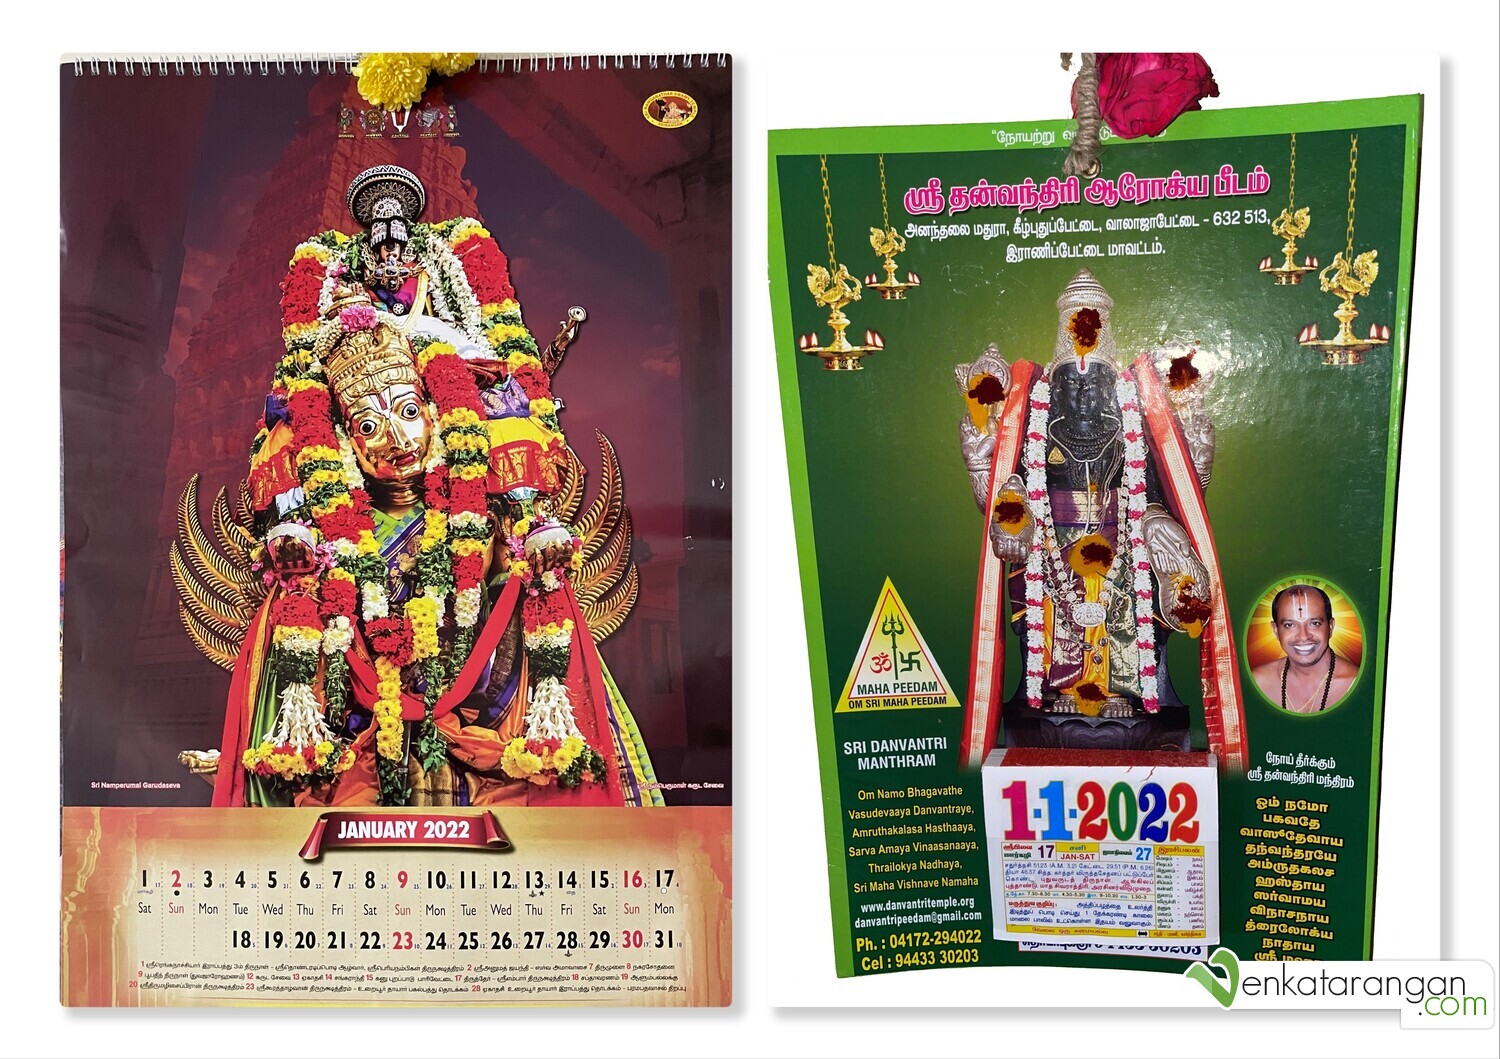 Monthly calendar featuring Srirangam Sri Namperumal Garudaseva (ஸ்ரீ நம்பெருமாள் கருட சேவை நாட்காட்டி) & Daily sheet calendar featuring Sri Danvantri (ஸ்ரீ தன்வந்தரி நாட்காட்டி)